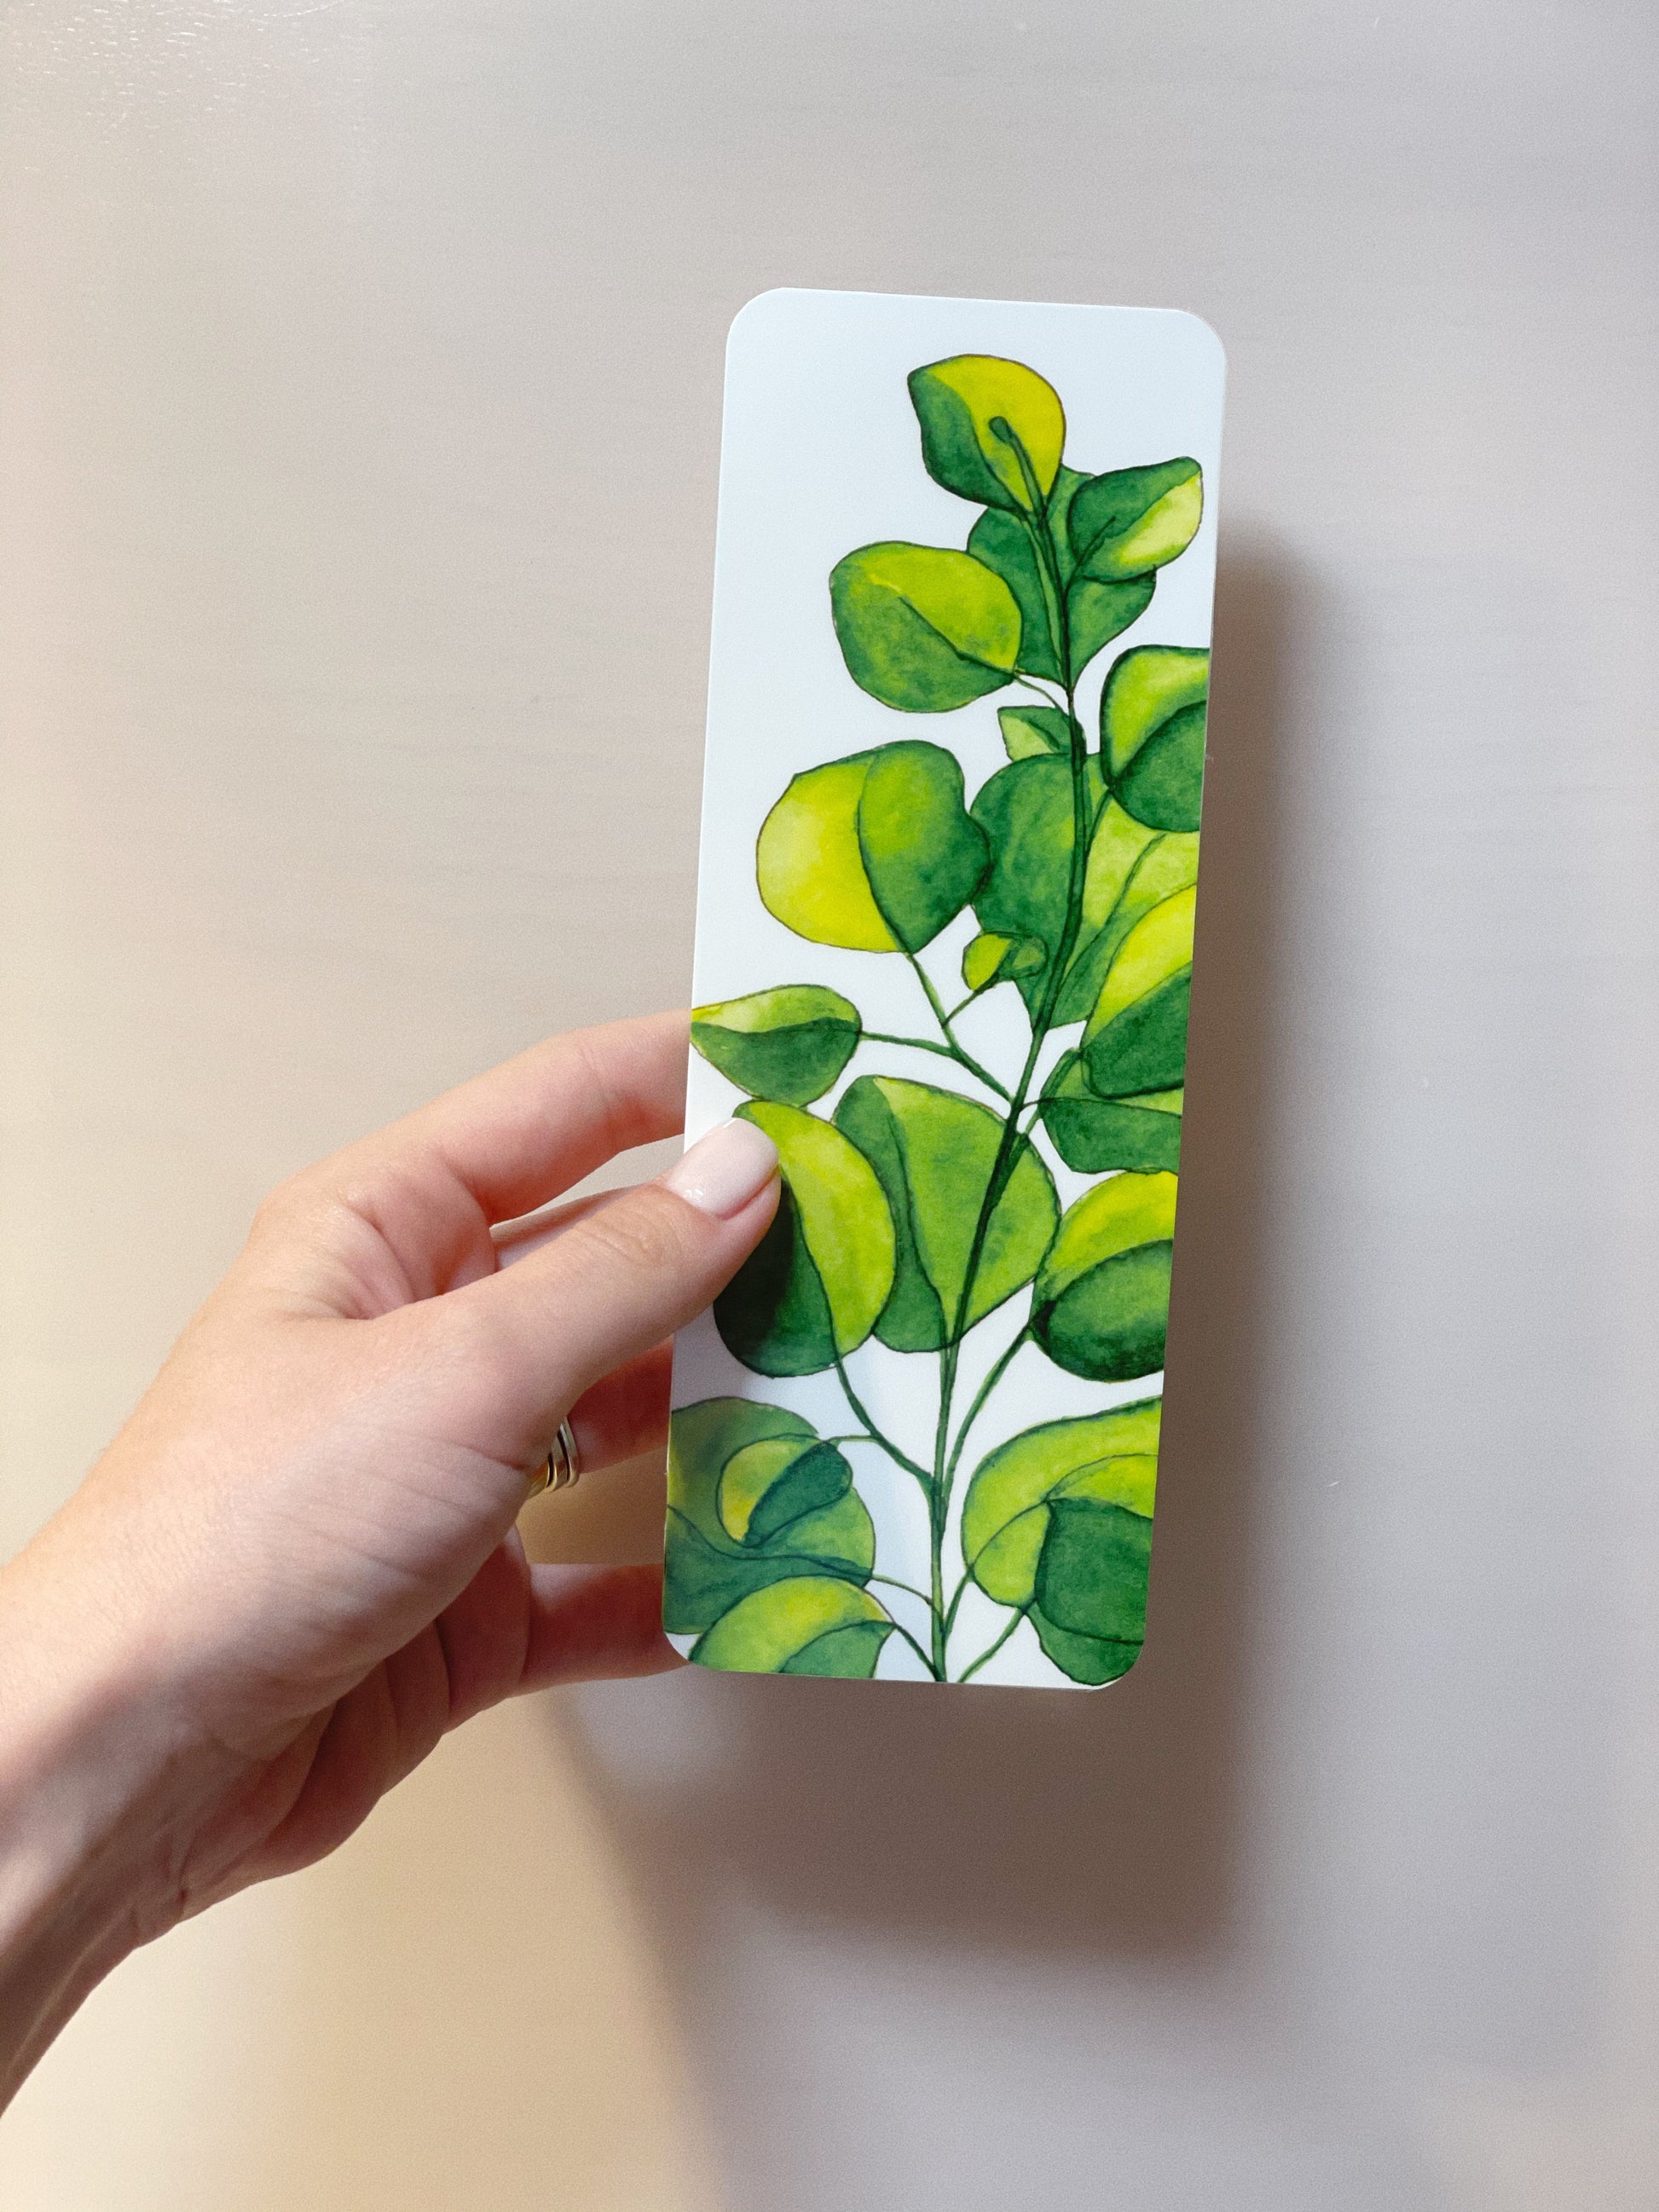 Eucalyptus Bookmark Products | Natella Libin